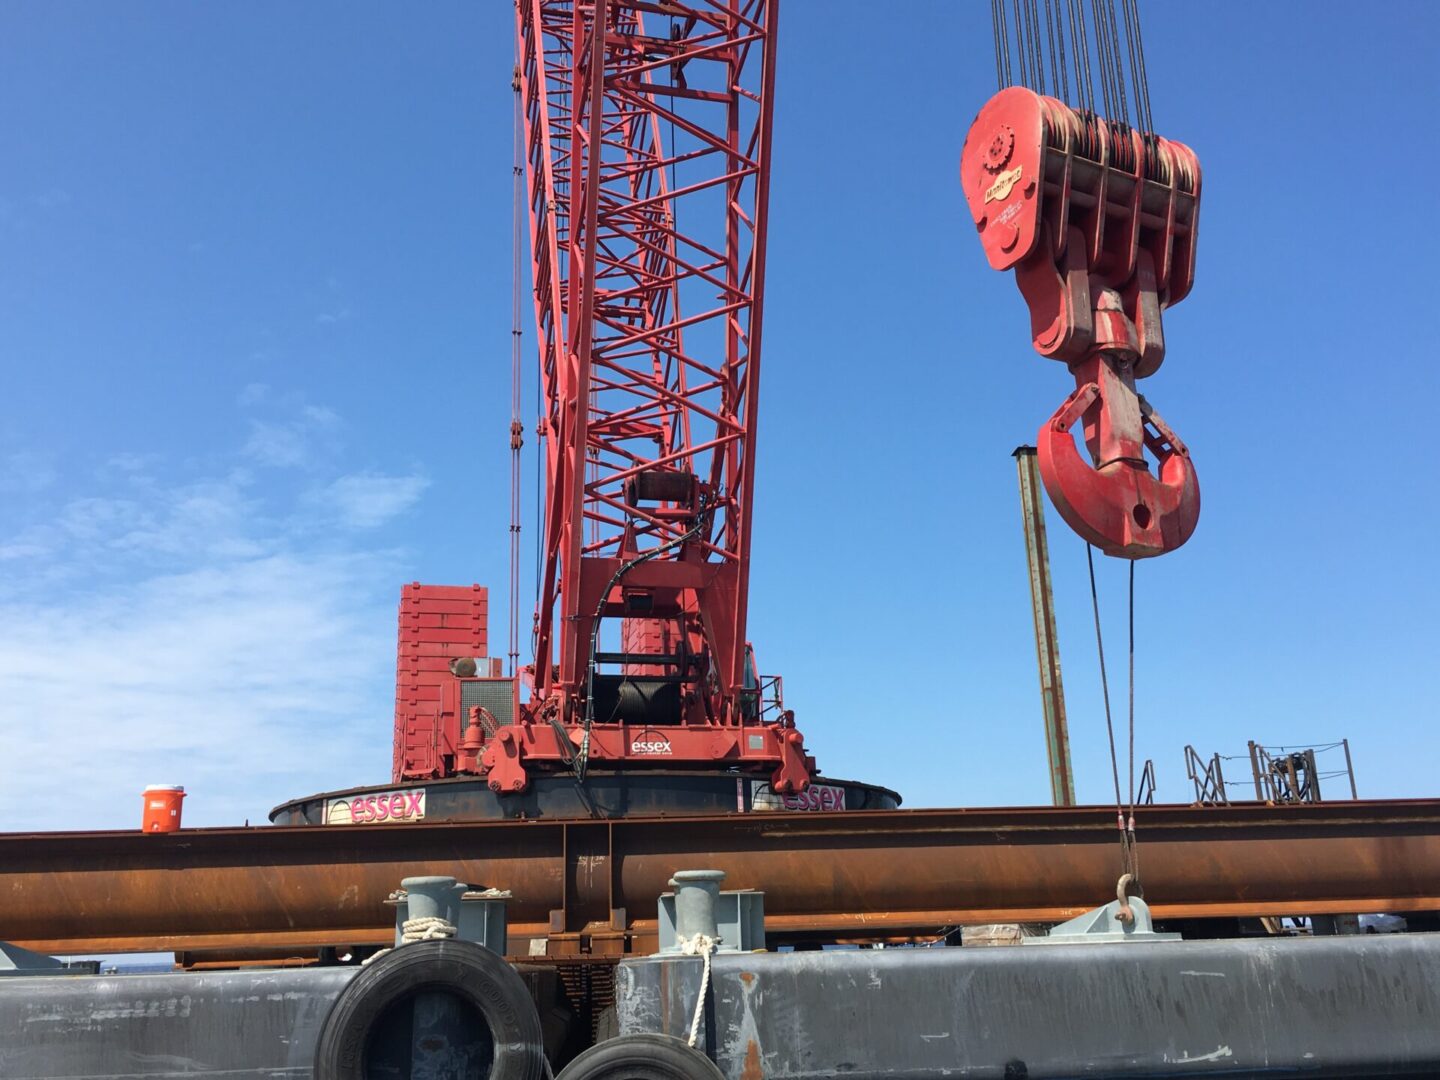 A red color crane at a construction site